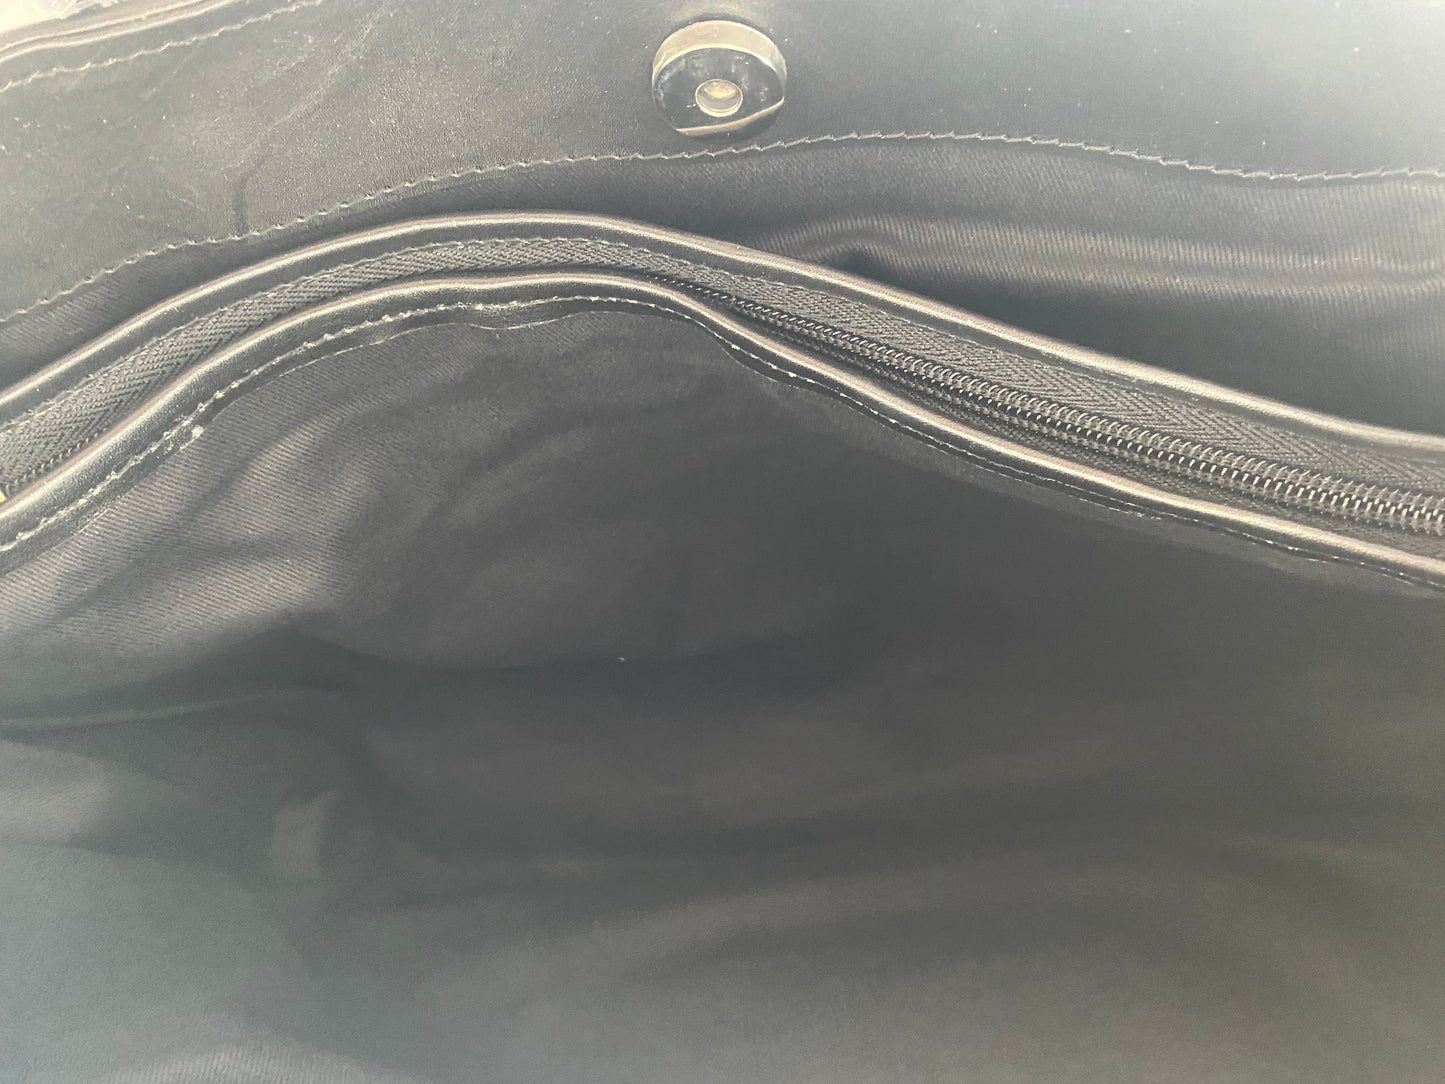 Tods Black Leather Tote Handbag